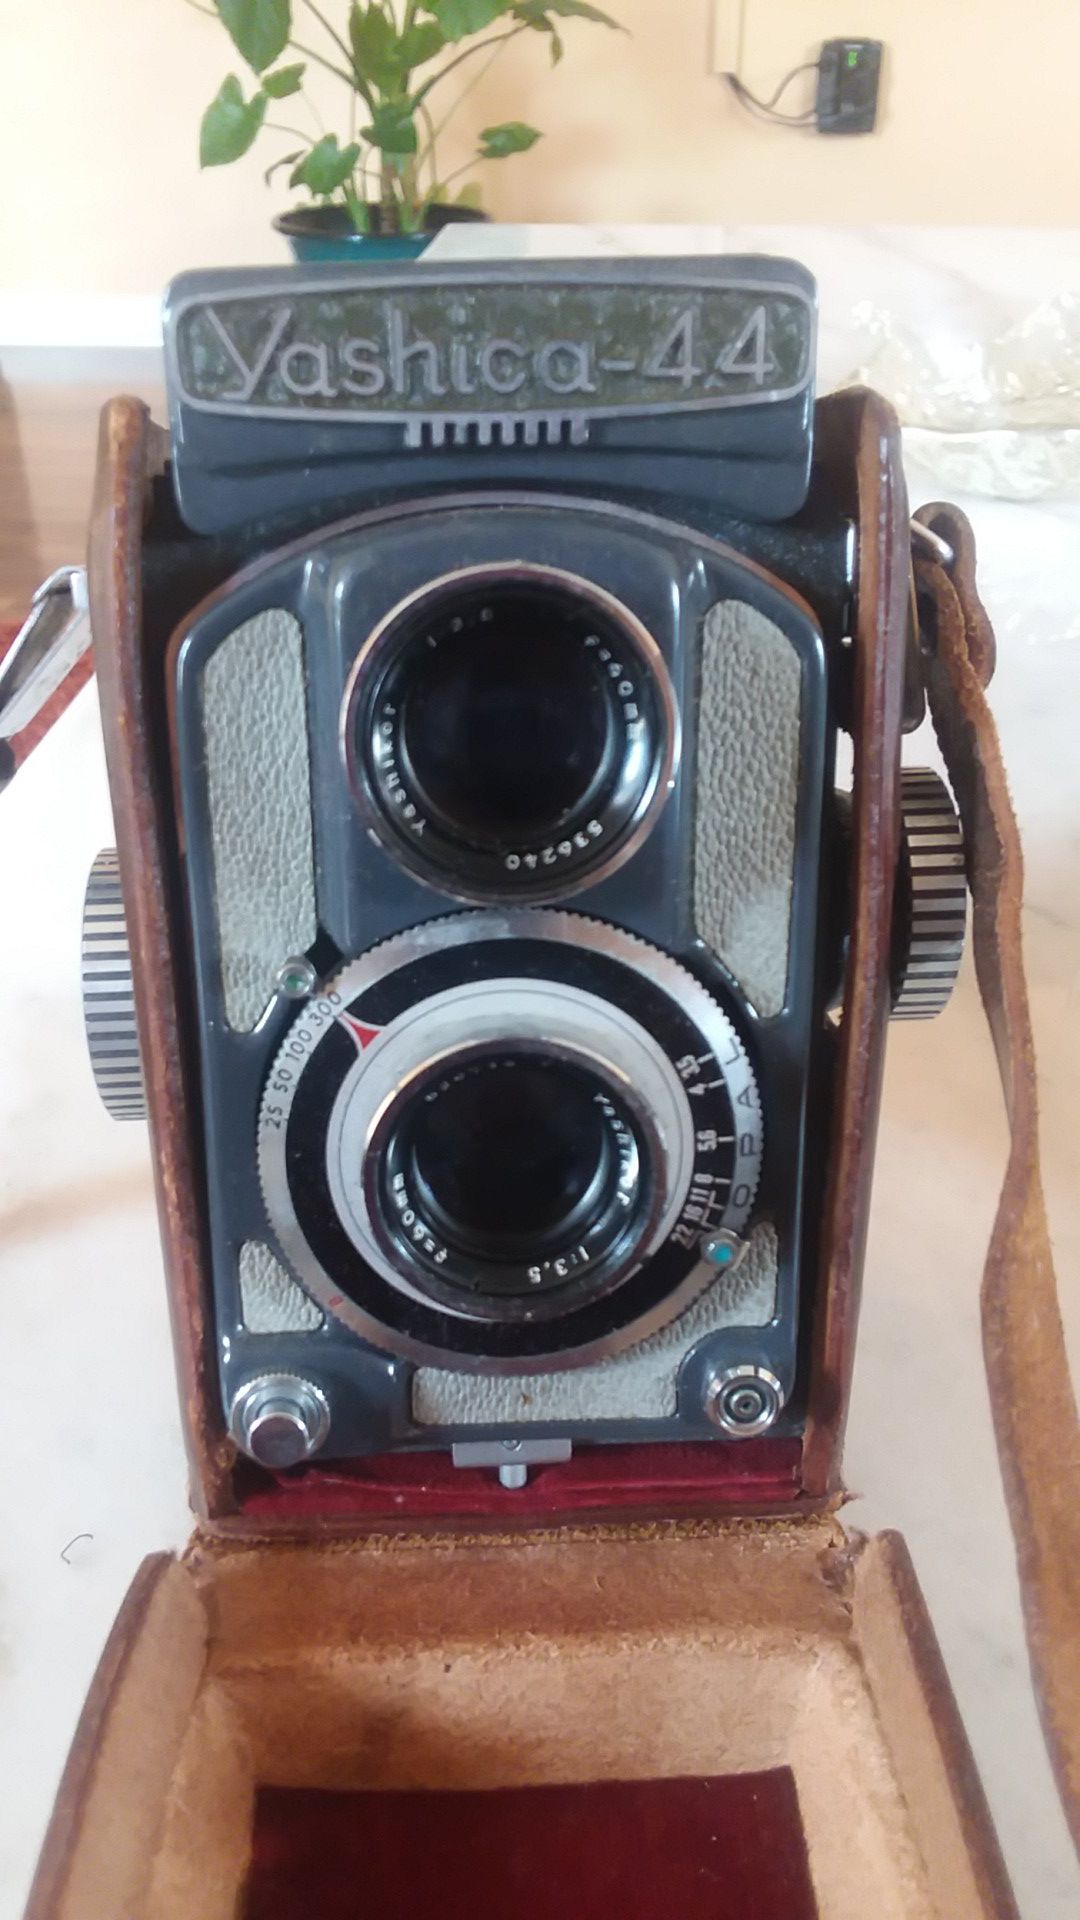 Yashica-44 camera